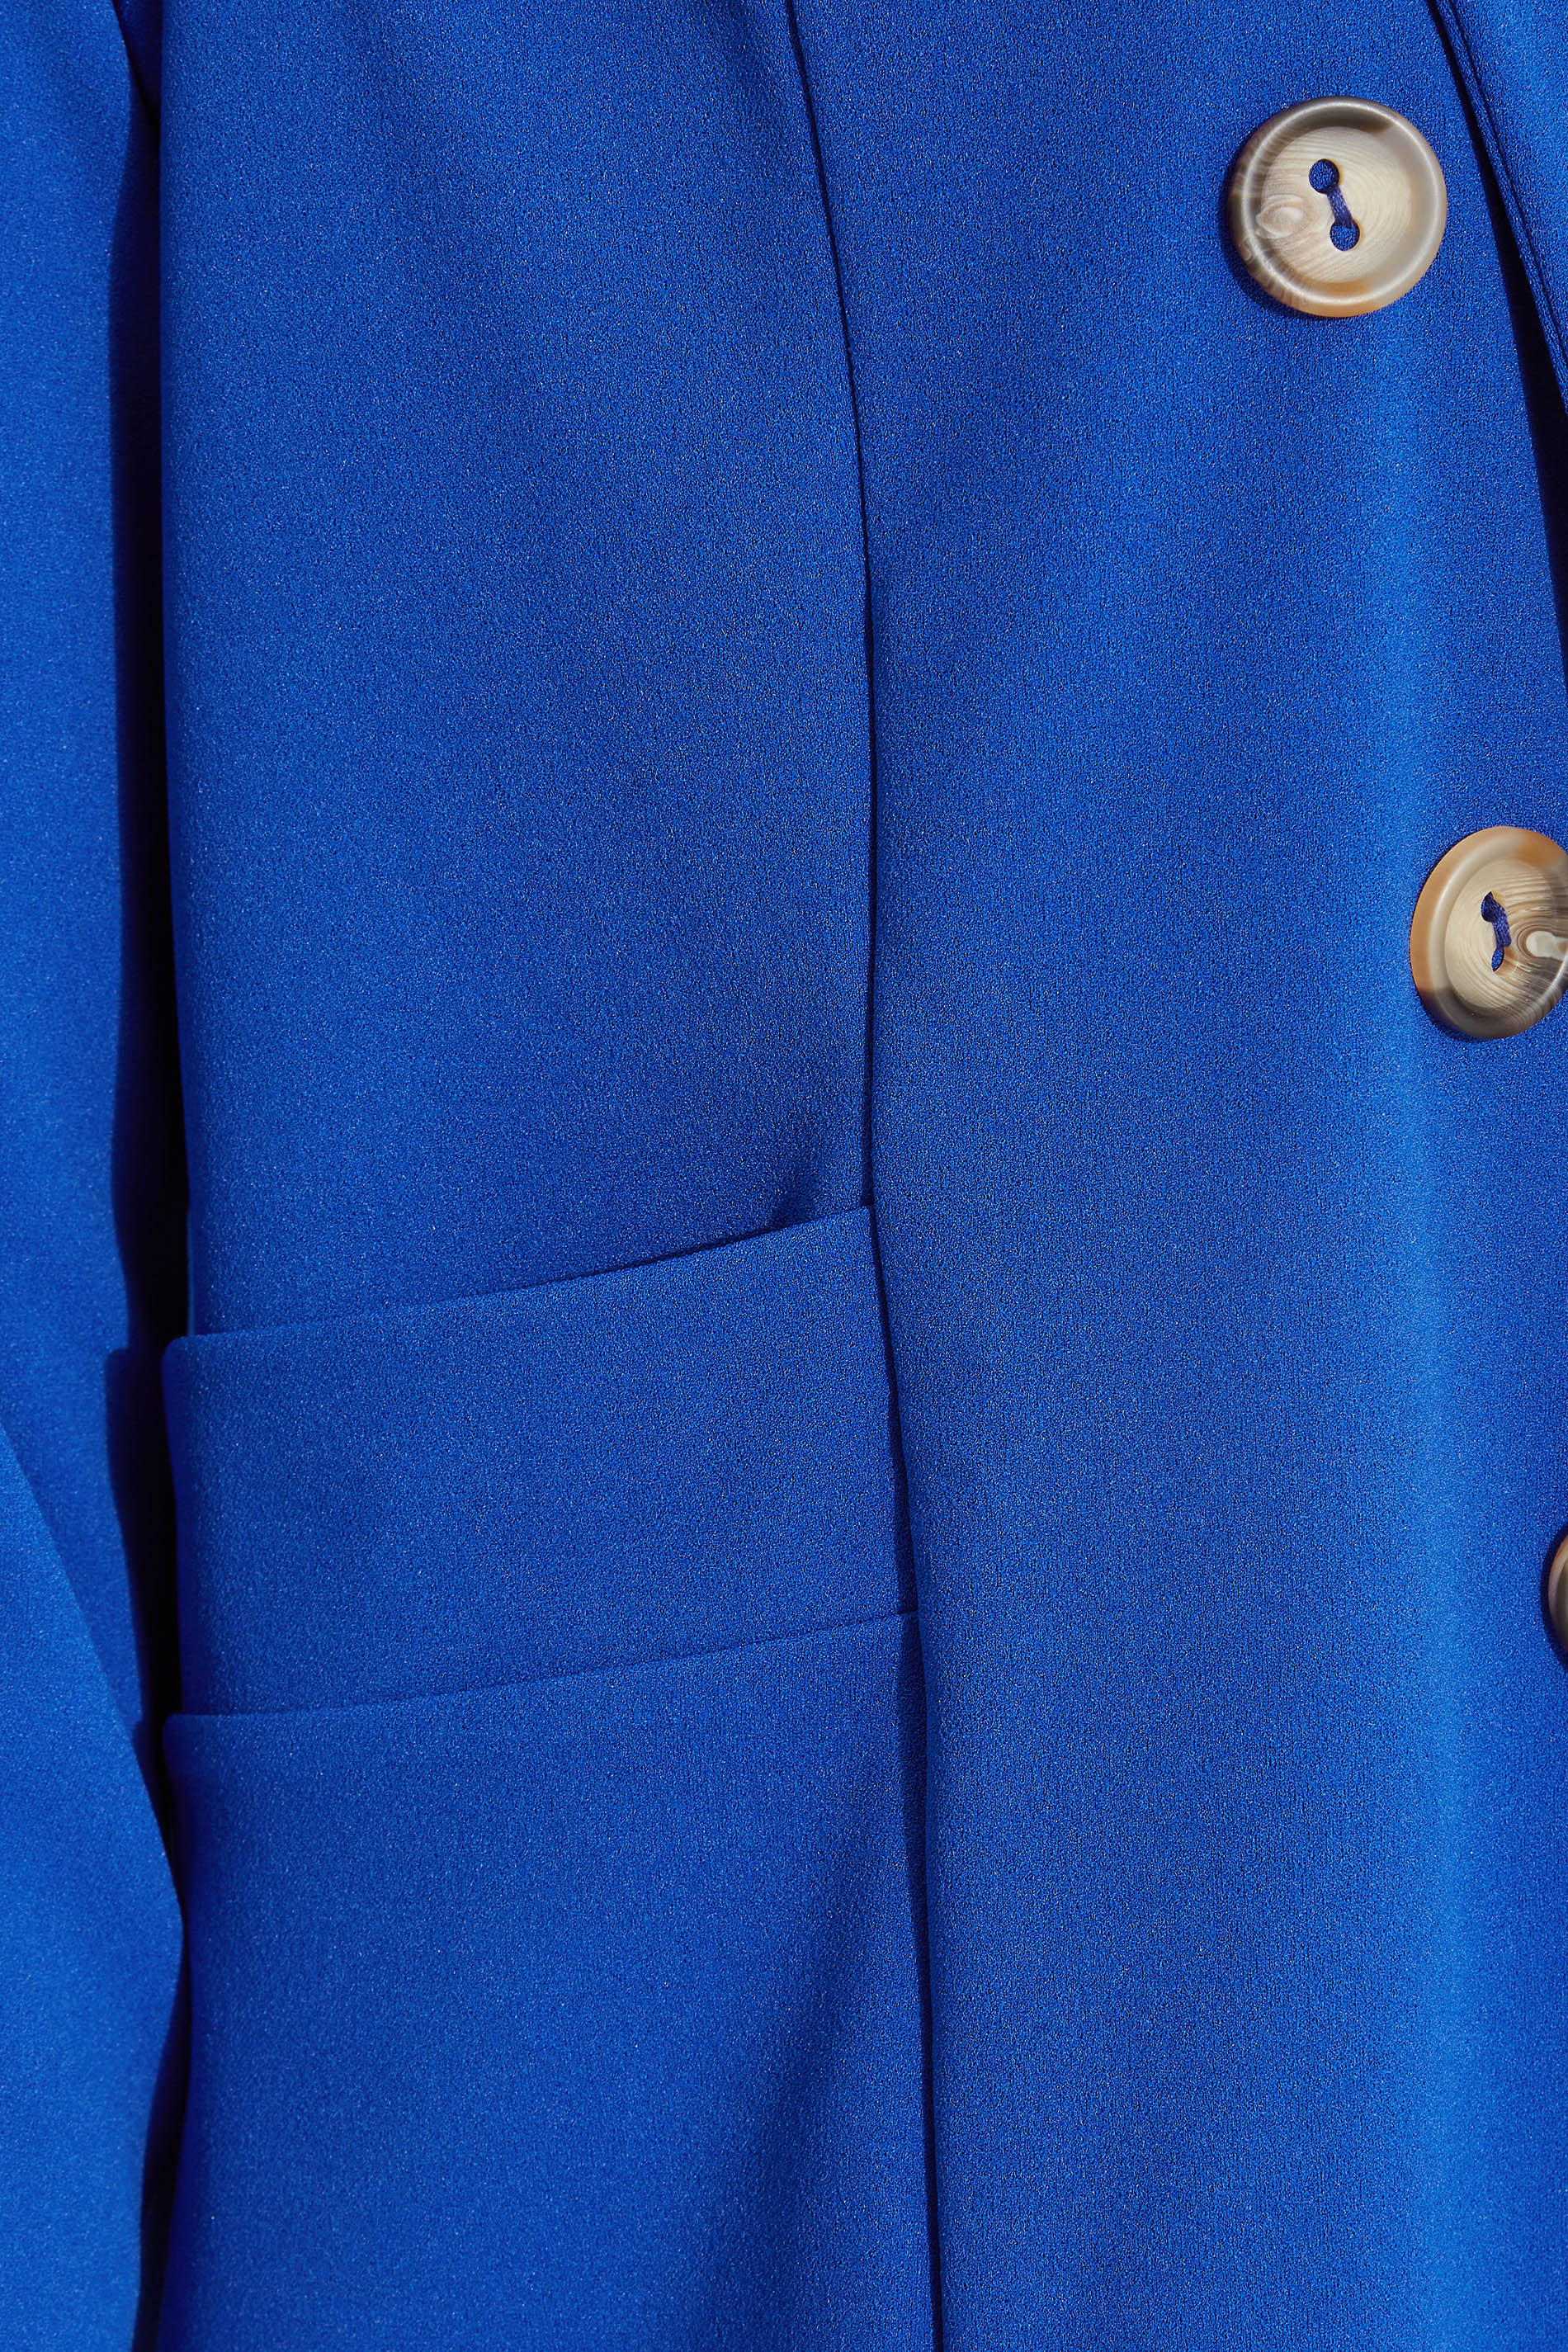 LIMITED COLLECTION Plus Size Cobalt Blue Button Front Blazer | Yours ...